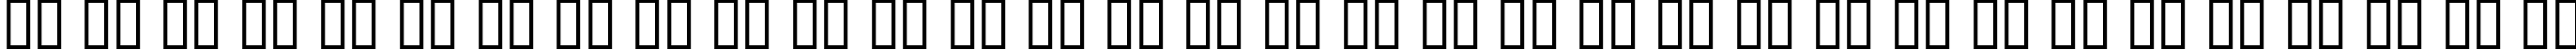 Пример написания русского алфавита шрифтом LateNite